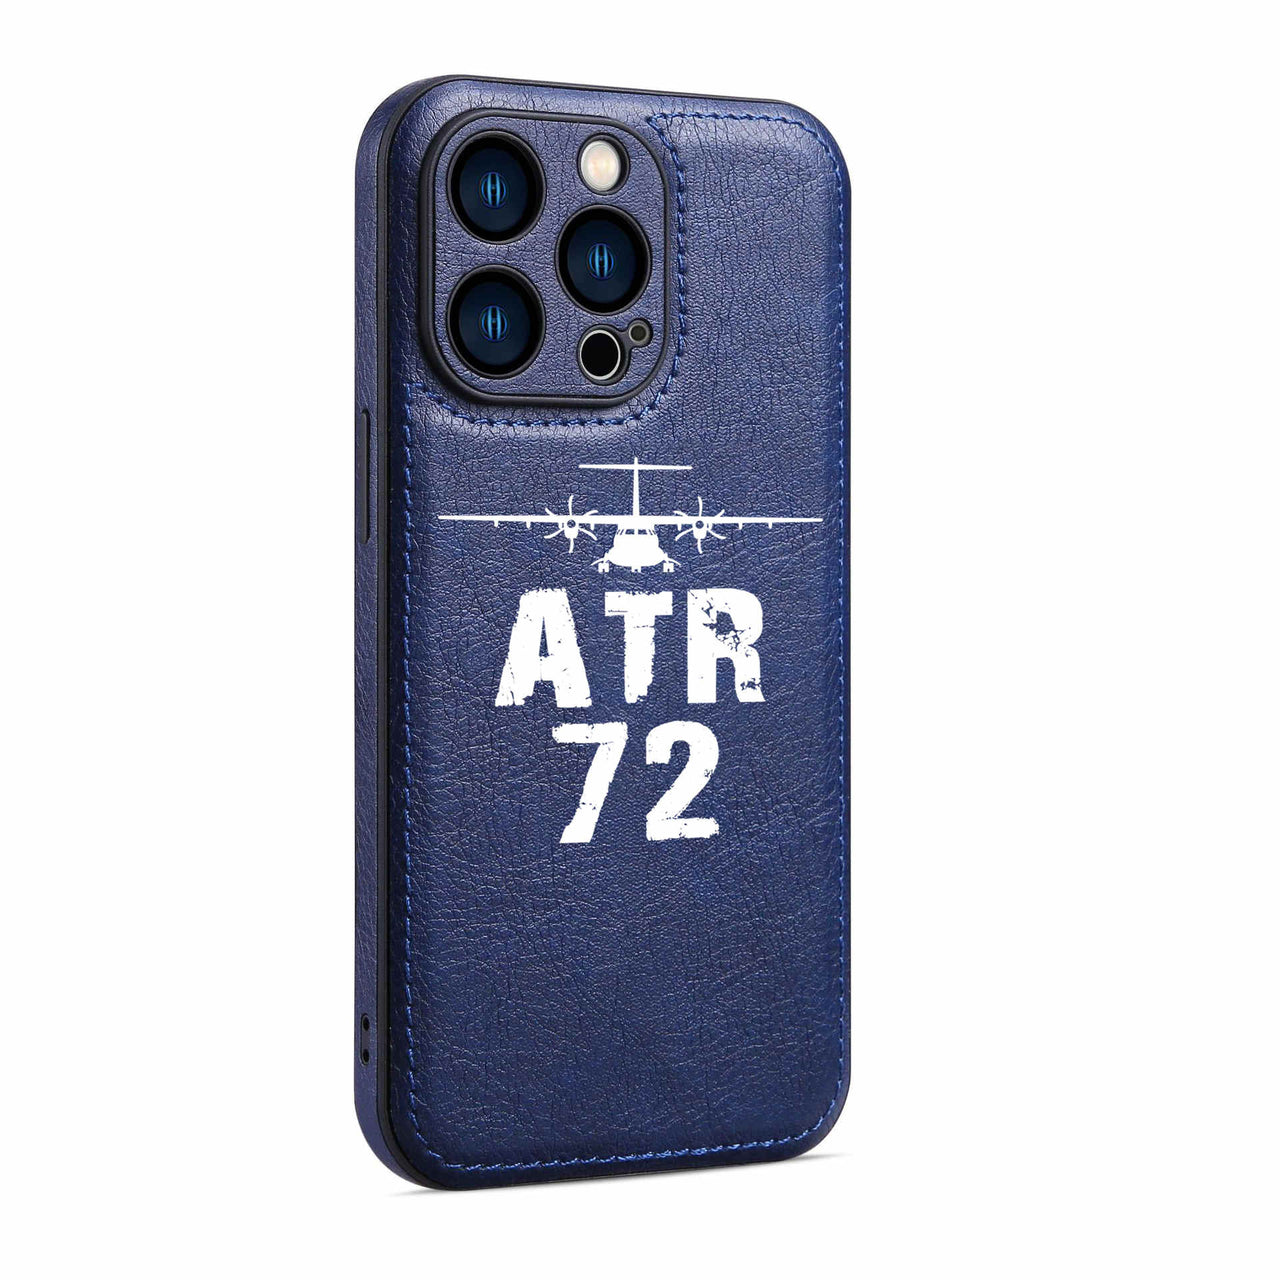 ATR-72 & Plane Designed Leather iPhone Cases